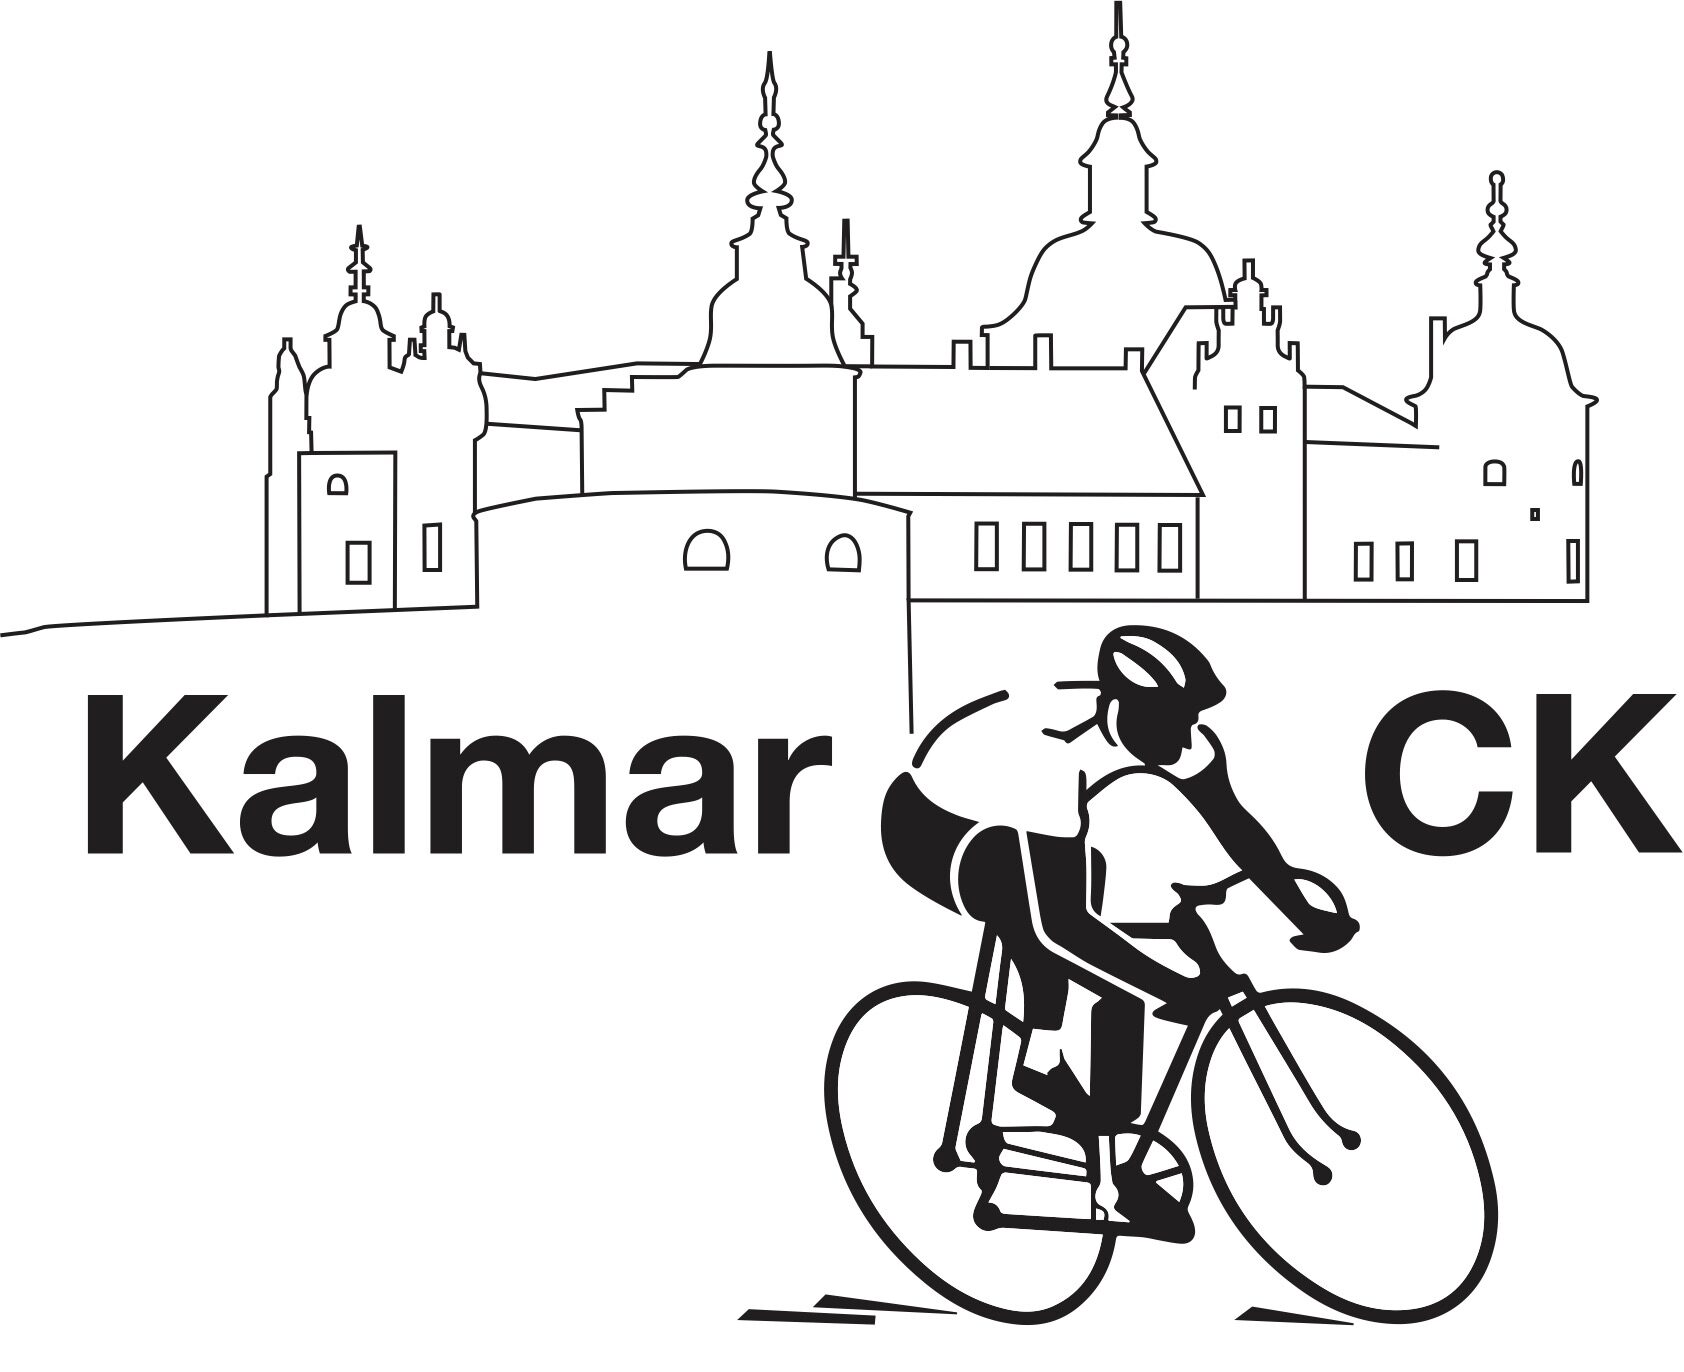 Kalmar cykelklubb